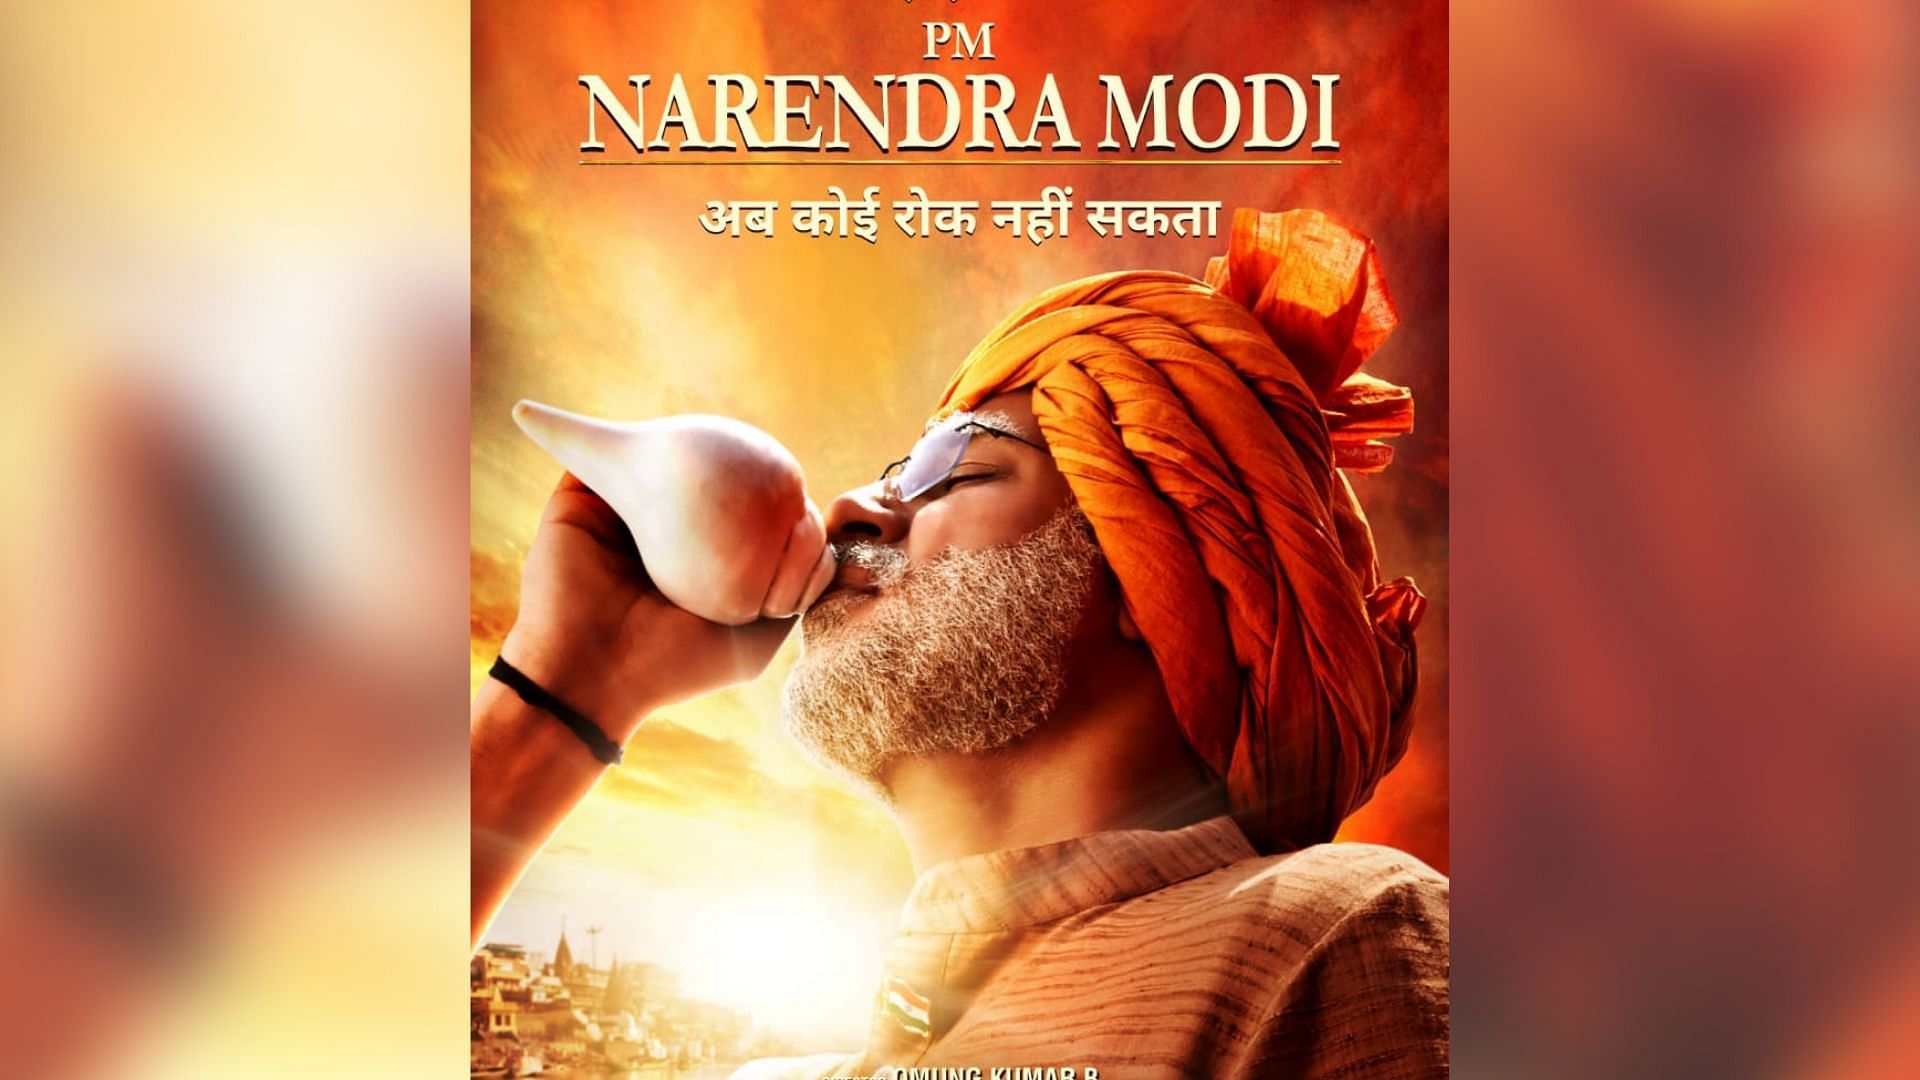 A poster for <i>PM Narendra Modi</i>.